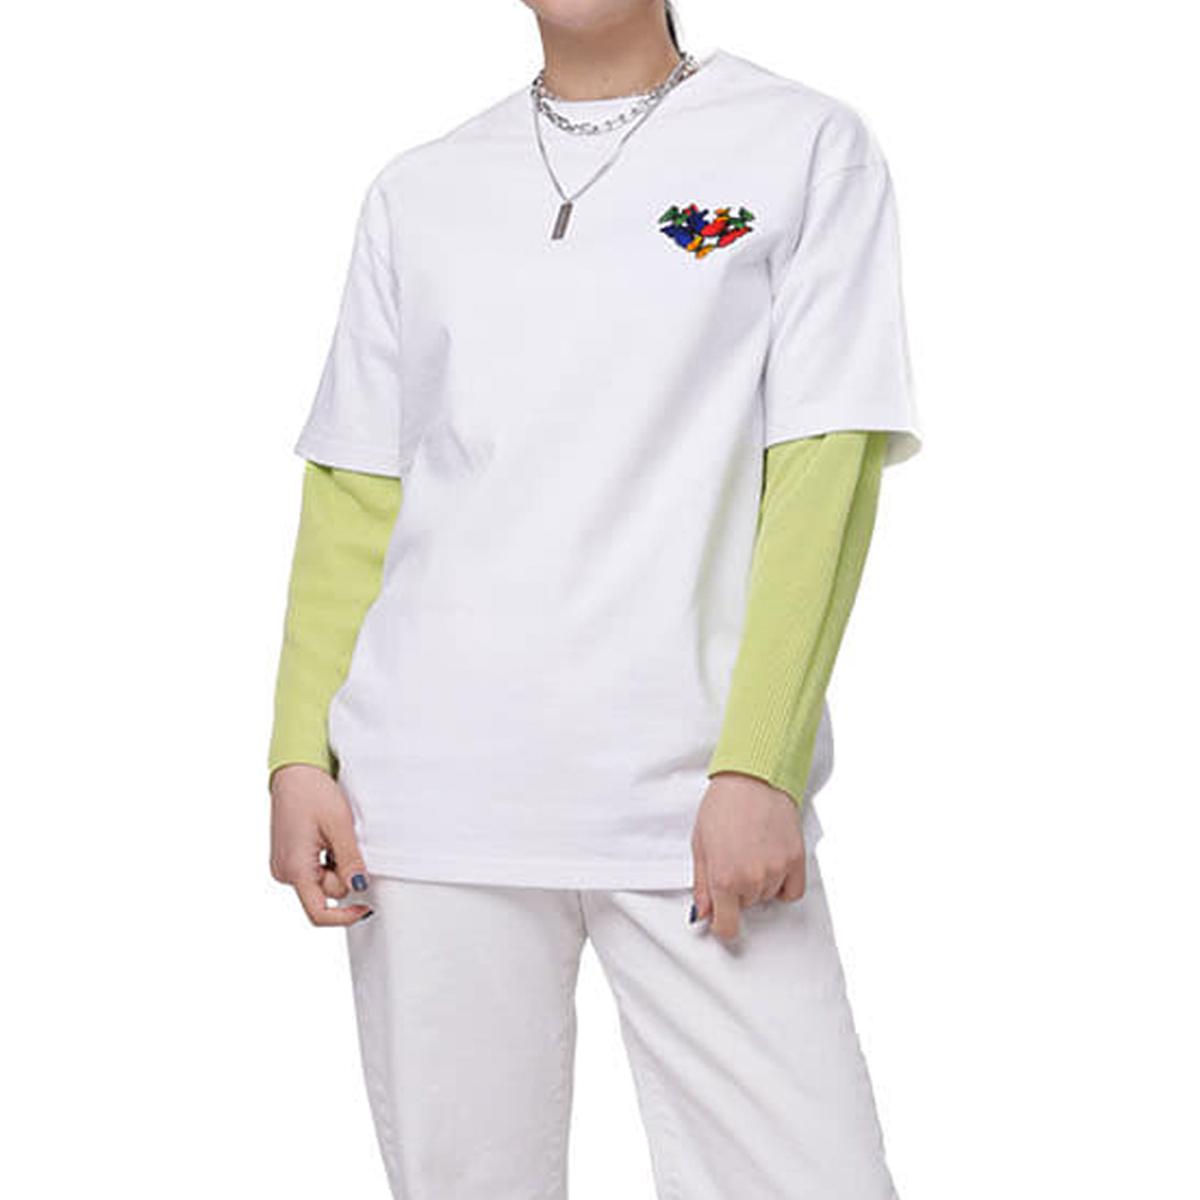 《BTS Jungkook同款》LAMODECHIEFLY蝴蝶愛心T恤（白色）